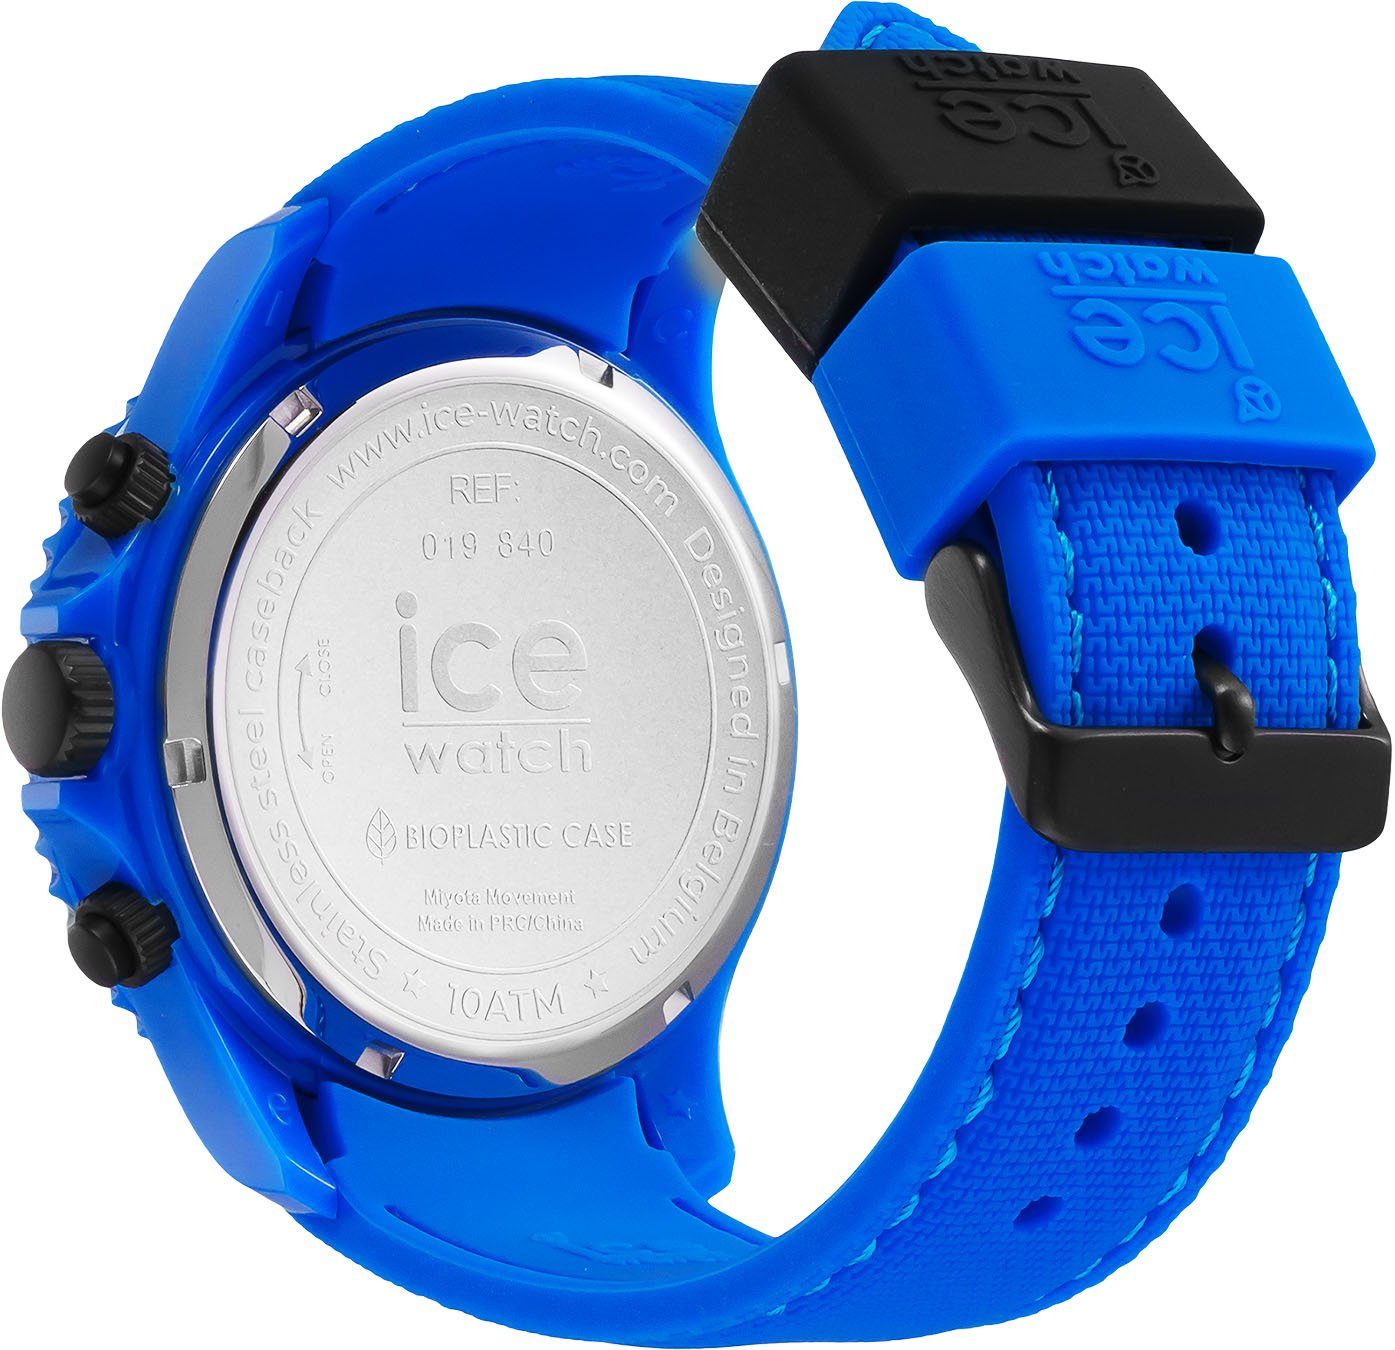 019840 - CH, ICE chrono - Chronograph ice-watch - blue blau Large Neon